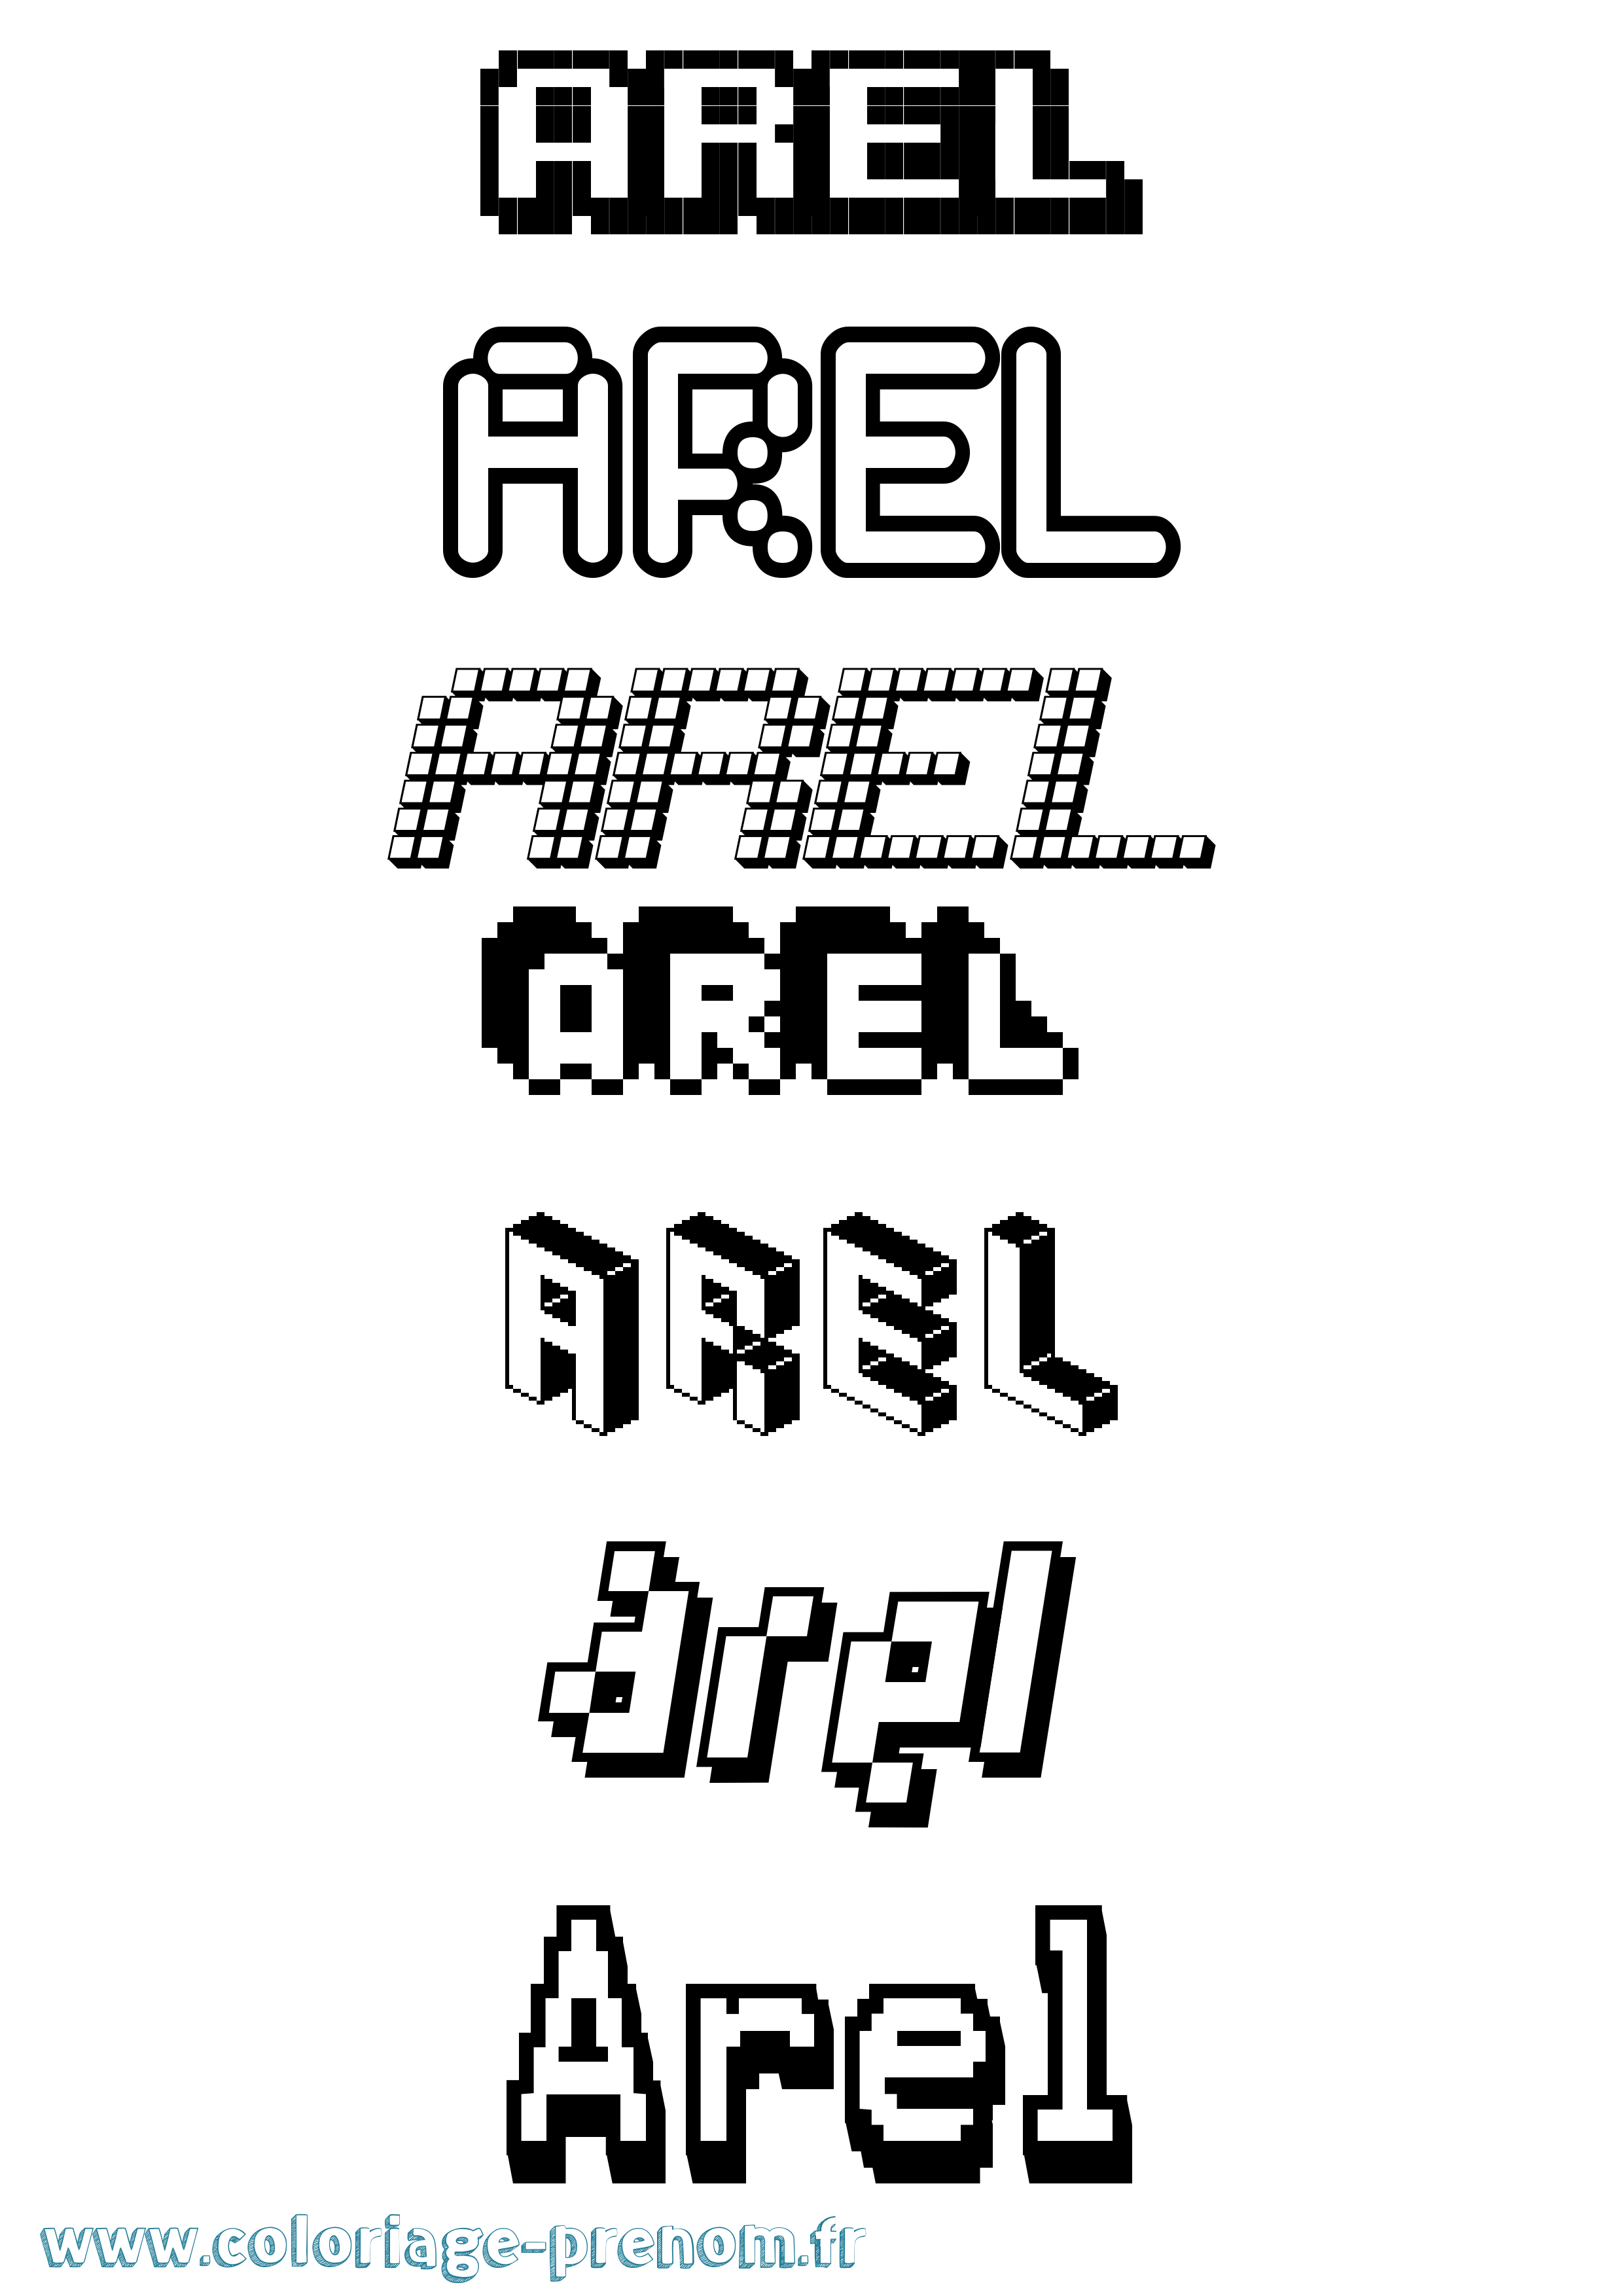 Coloriage prénom Arel Pixel